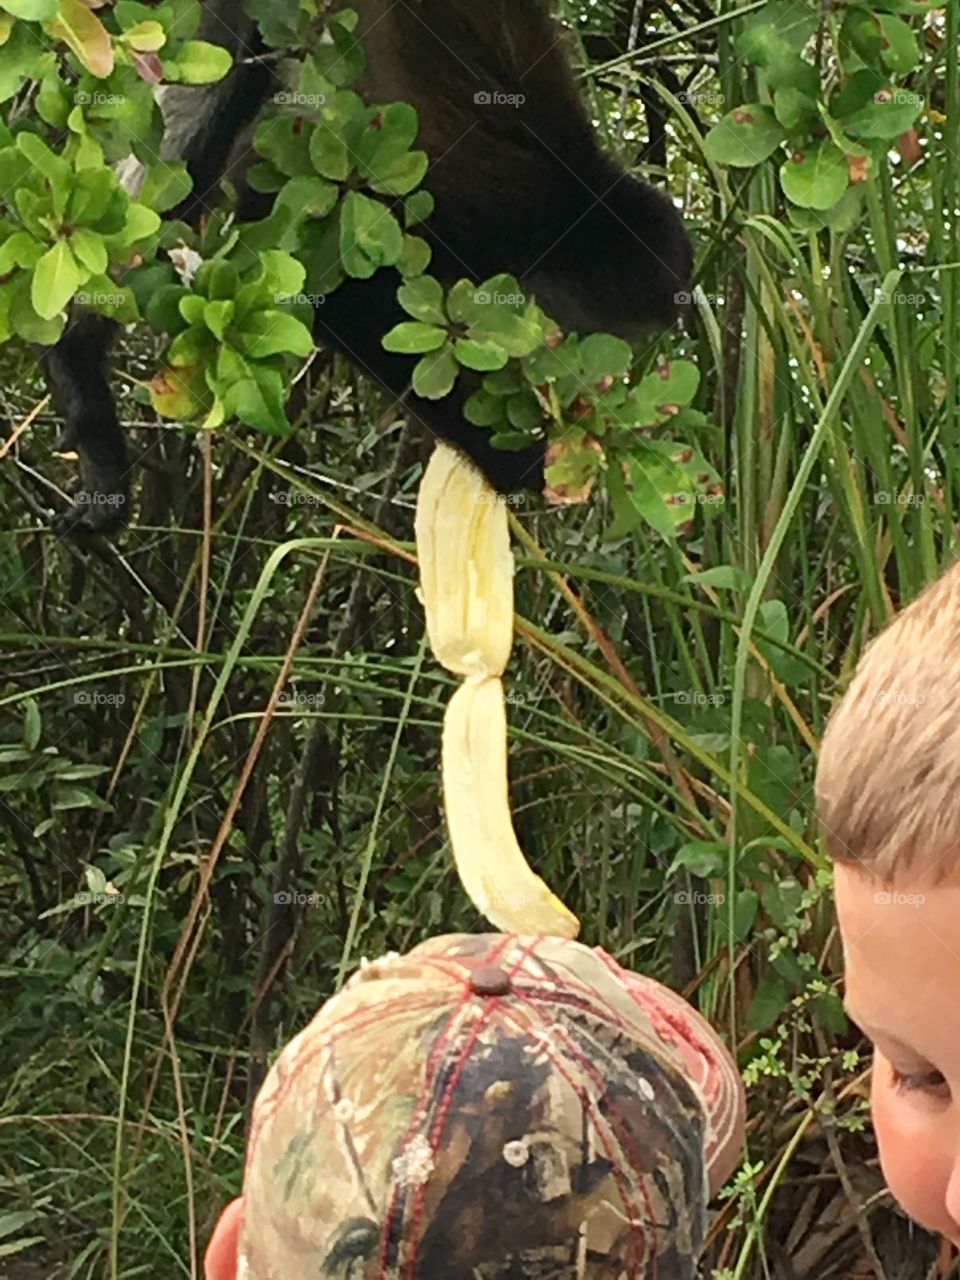 Belize monkey eating banana